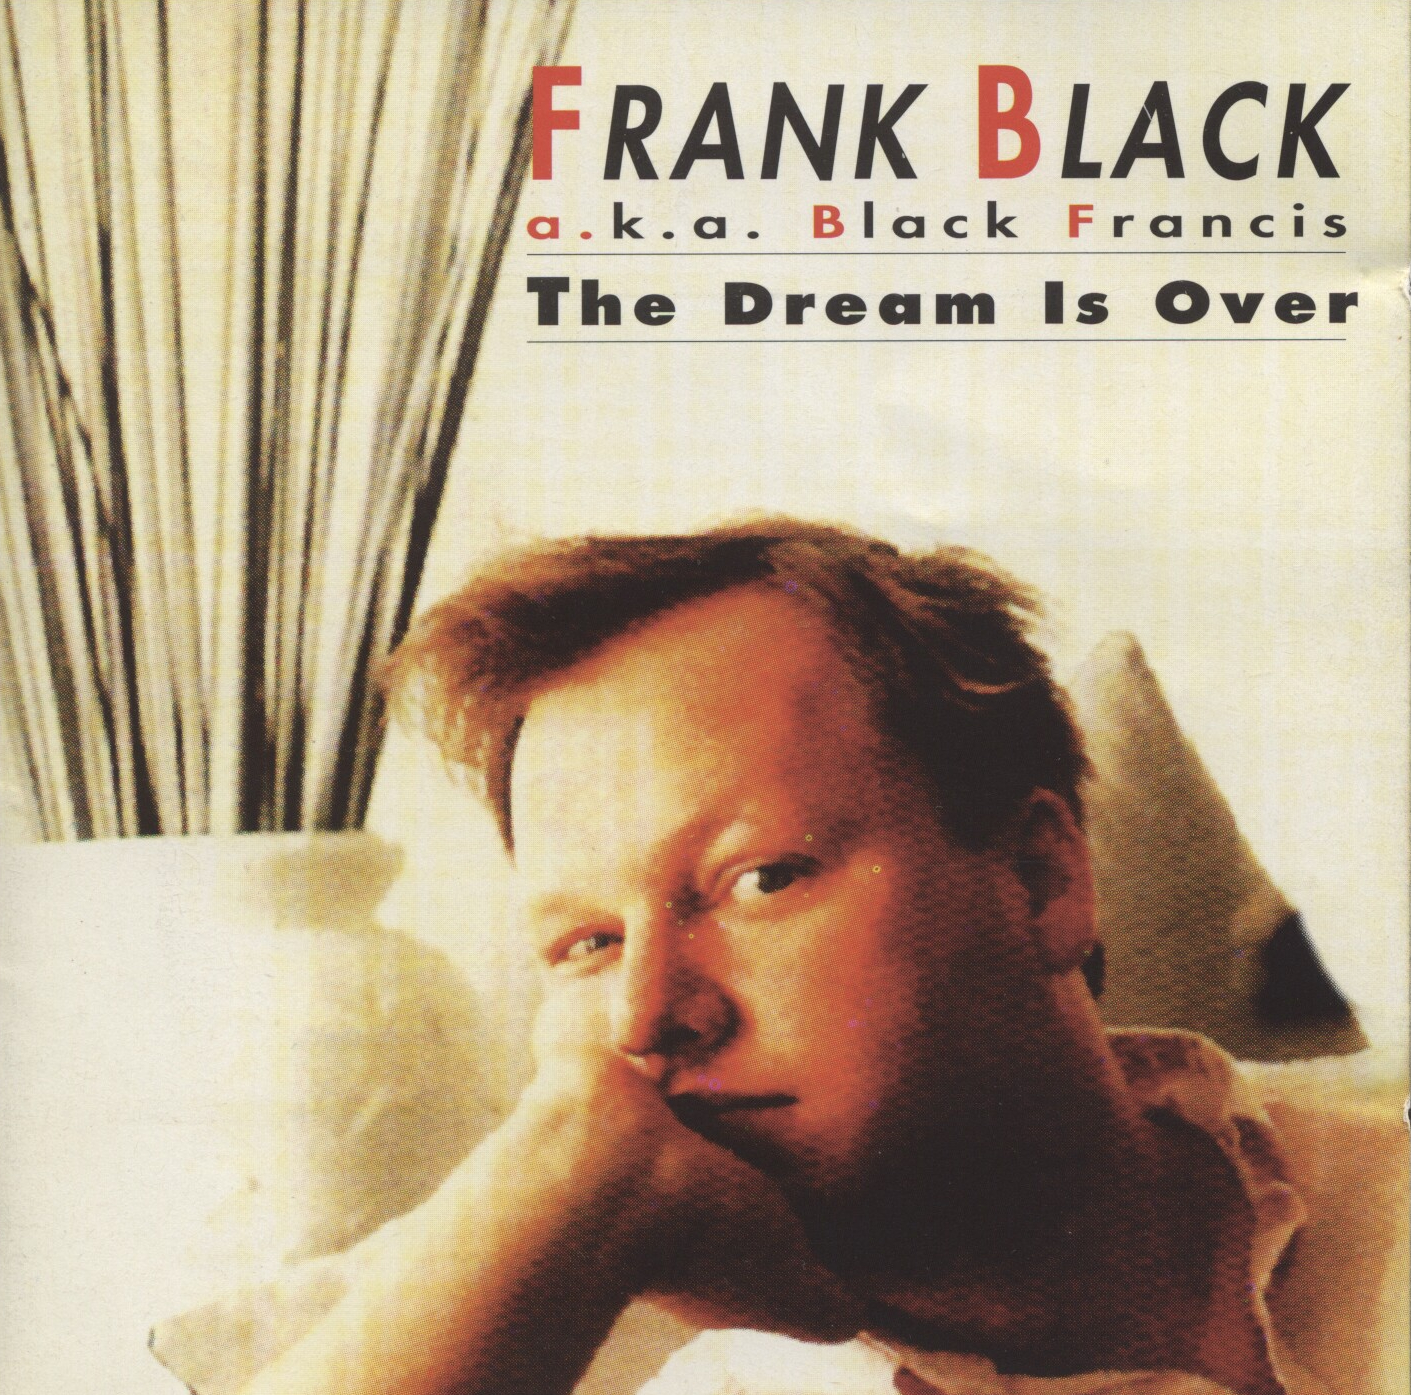 Черный фрэнк. Фрэнк Блэк. Фрэнк Блэк в молодости. Блэк Фрэнсис Pixies. Frank Black – Frank Black альбом.